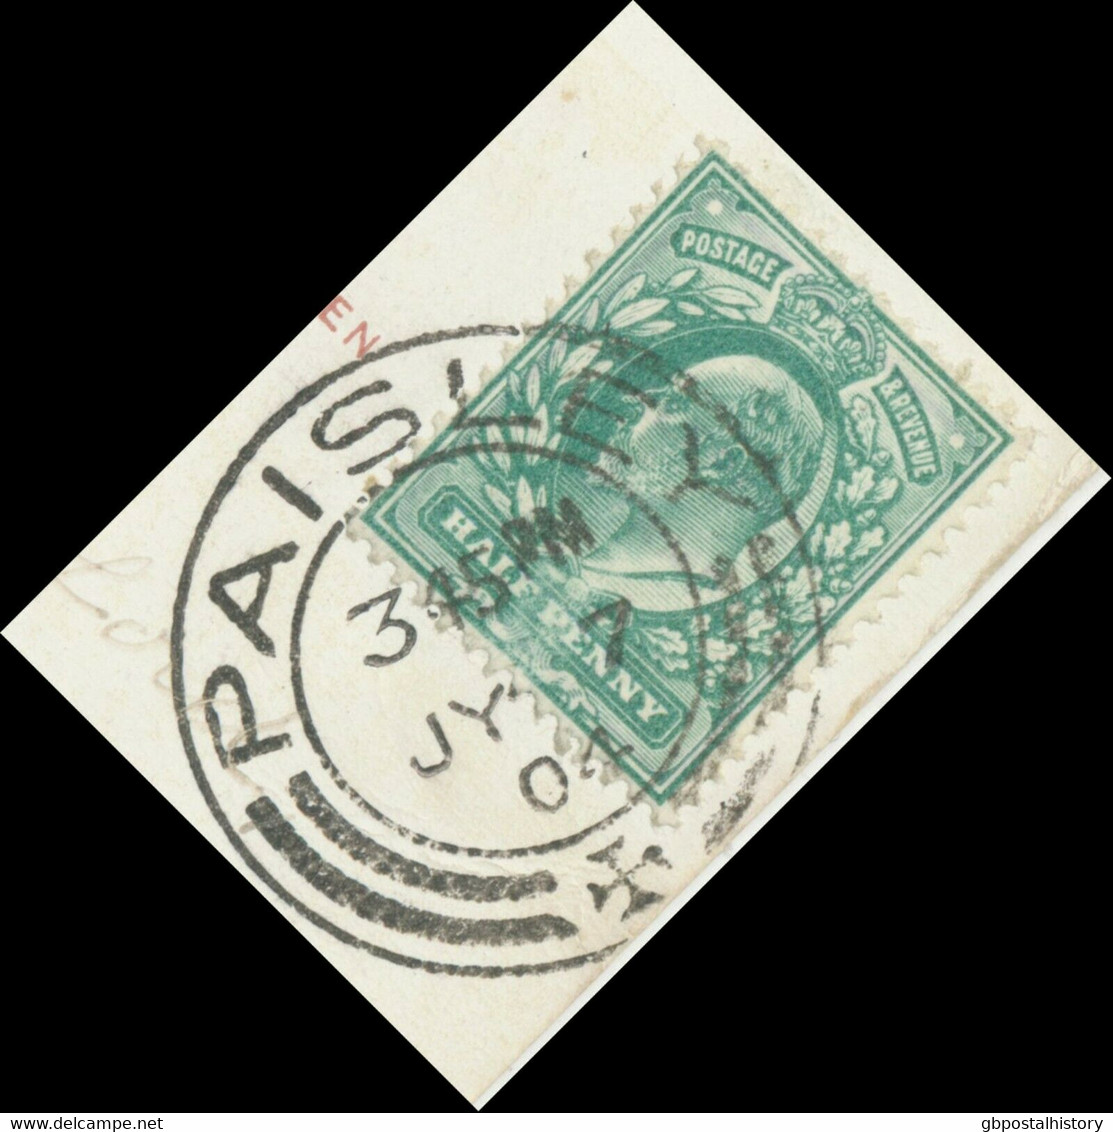 GB SCOTTISH VILLAGE POSTMARKS „PAISLEY“ Superb Strike (28mm, Time Code „3 45PM“) On VF Postcard (Marie Studholme) 1904 - Escocia